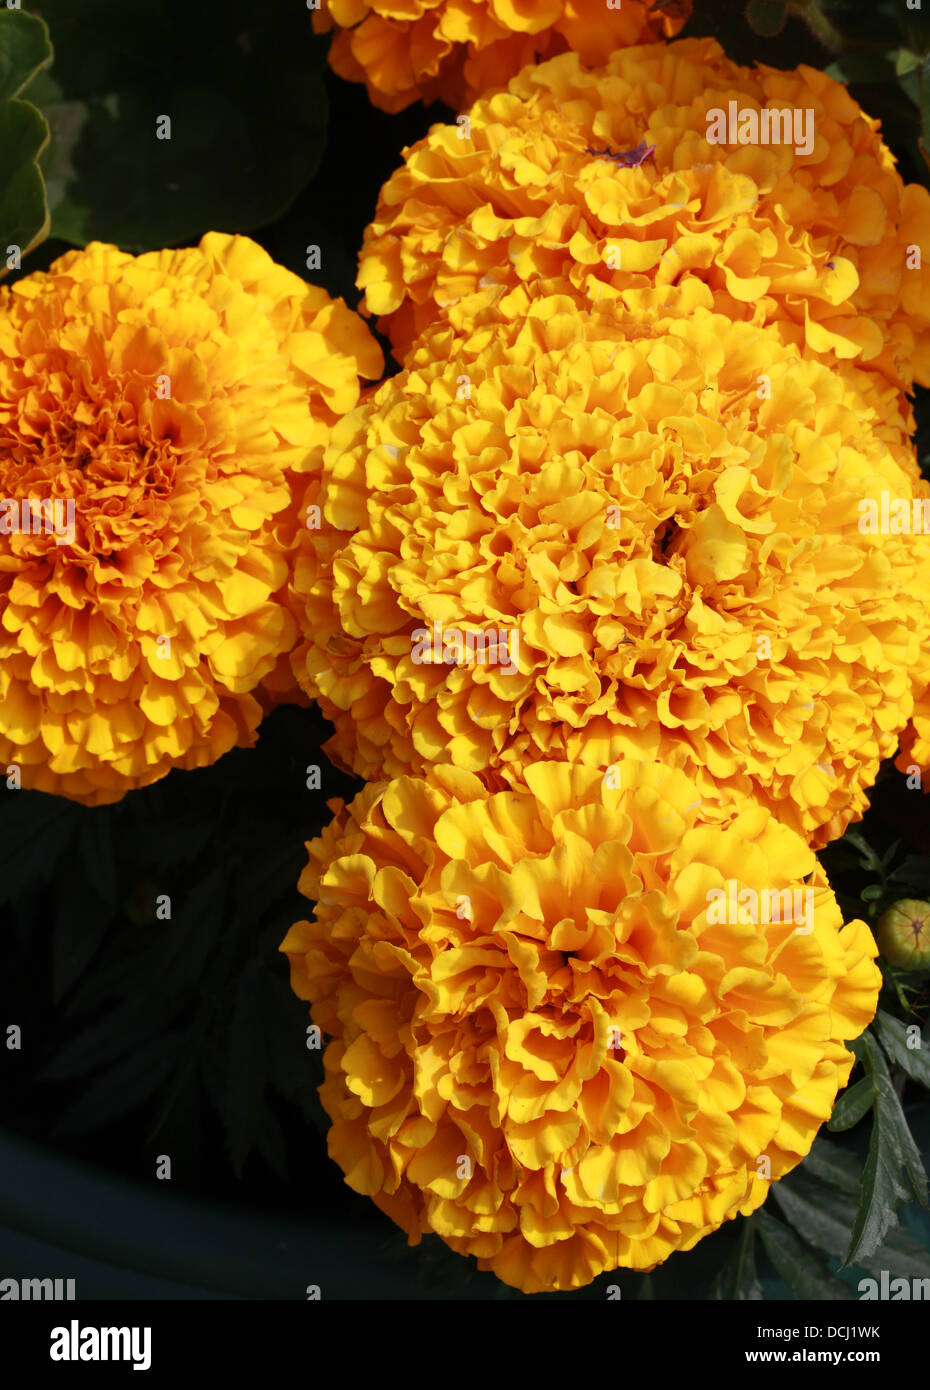 African Marigold, Mexican Marigold, Aztec Marigold, Tagetes erecta, Asteraceae. Stock Photo